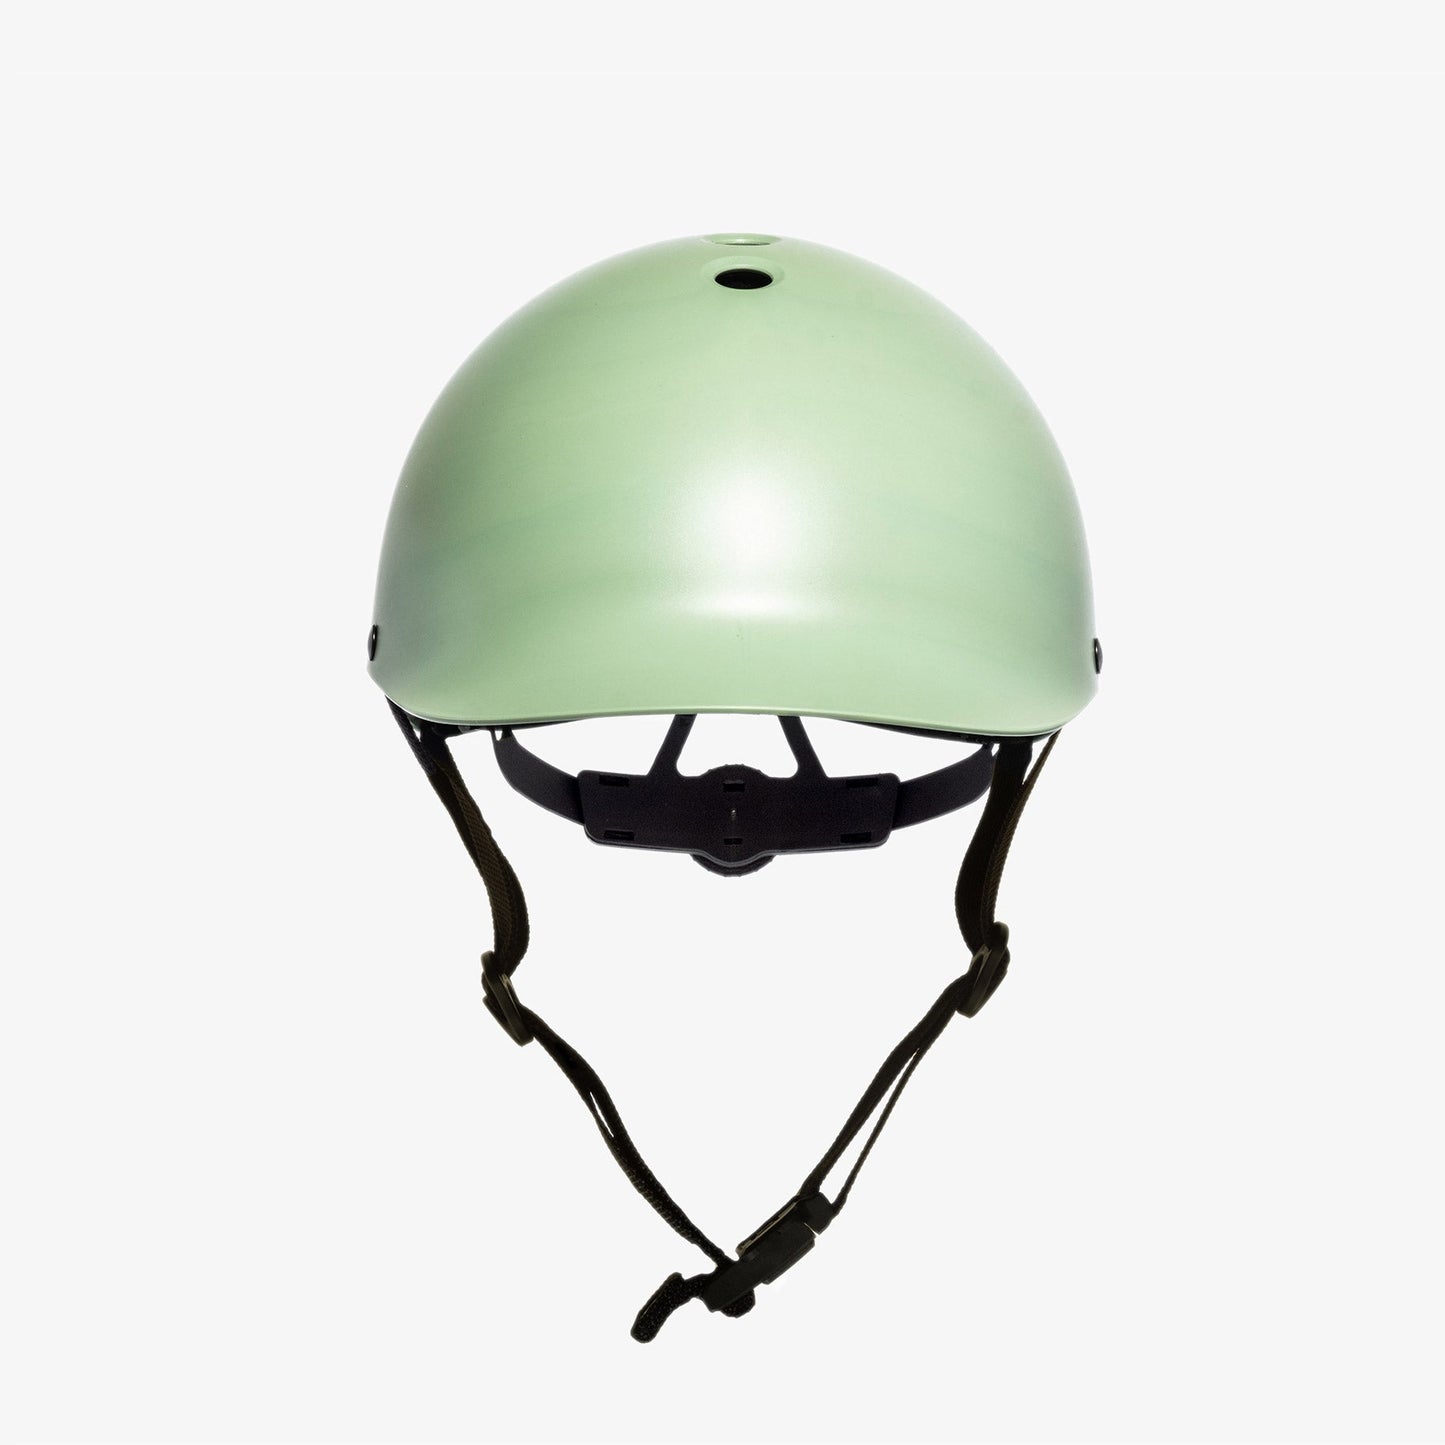 Dashel Ocean Edition Helmet